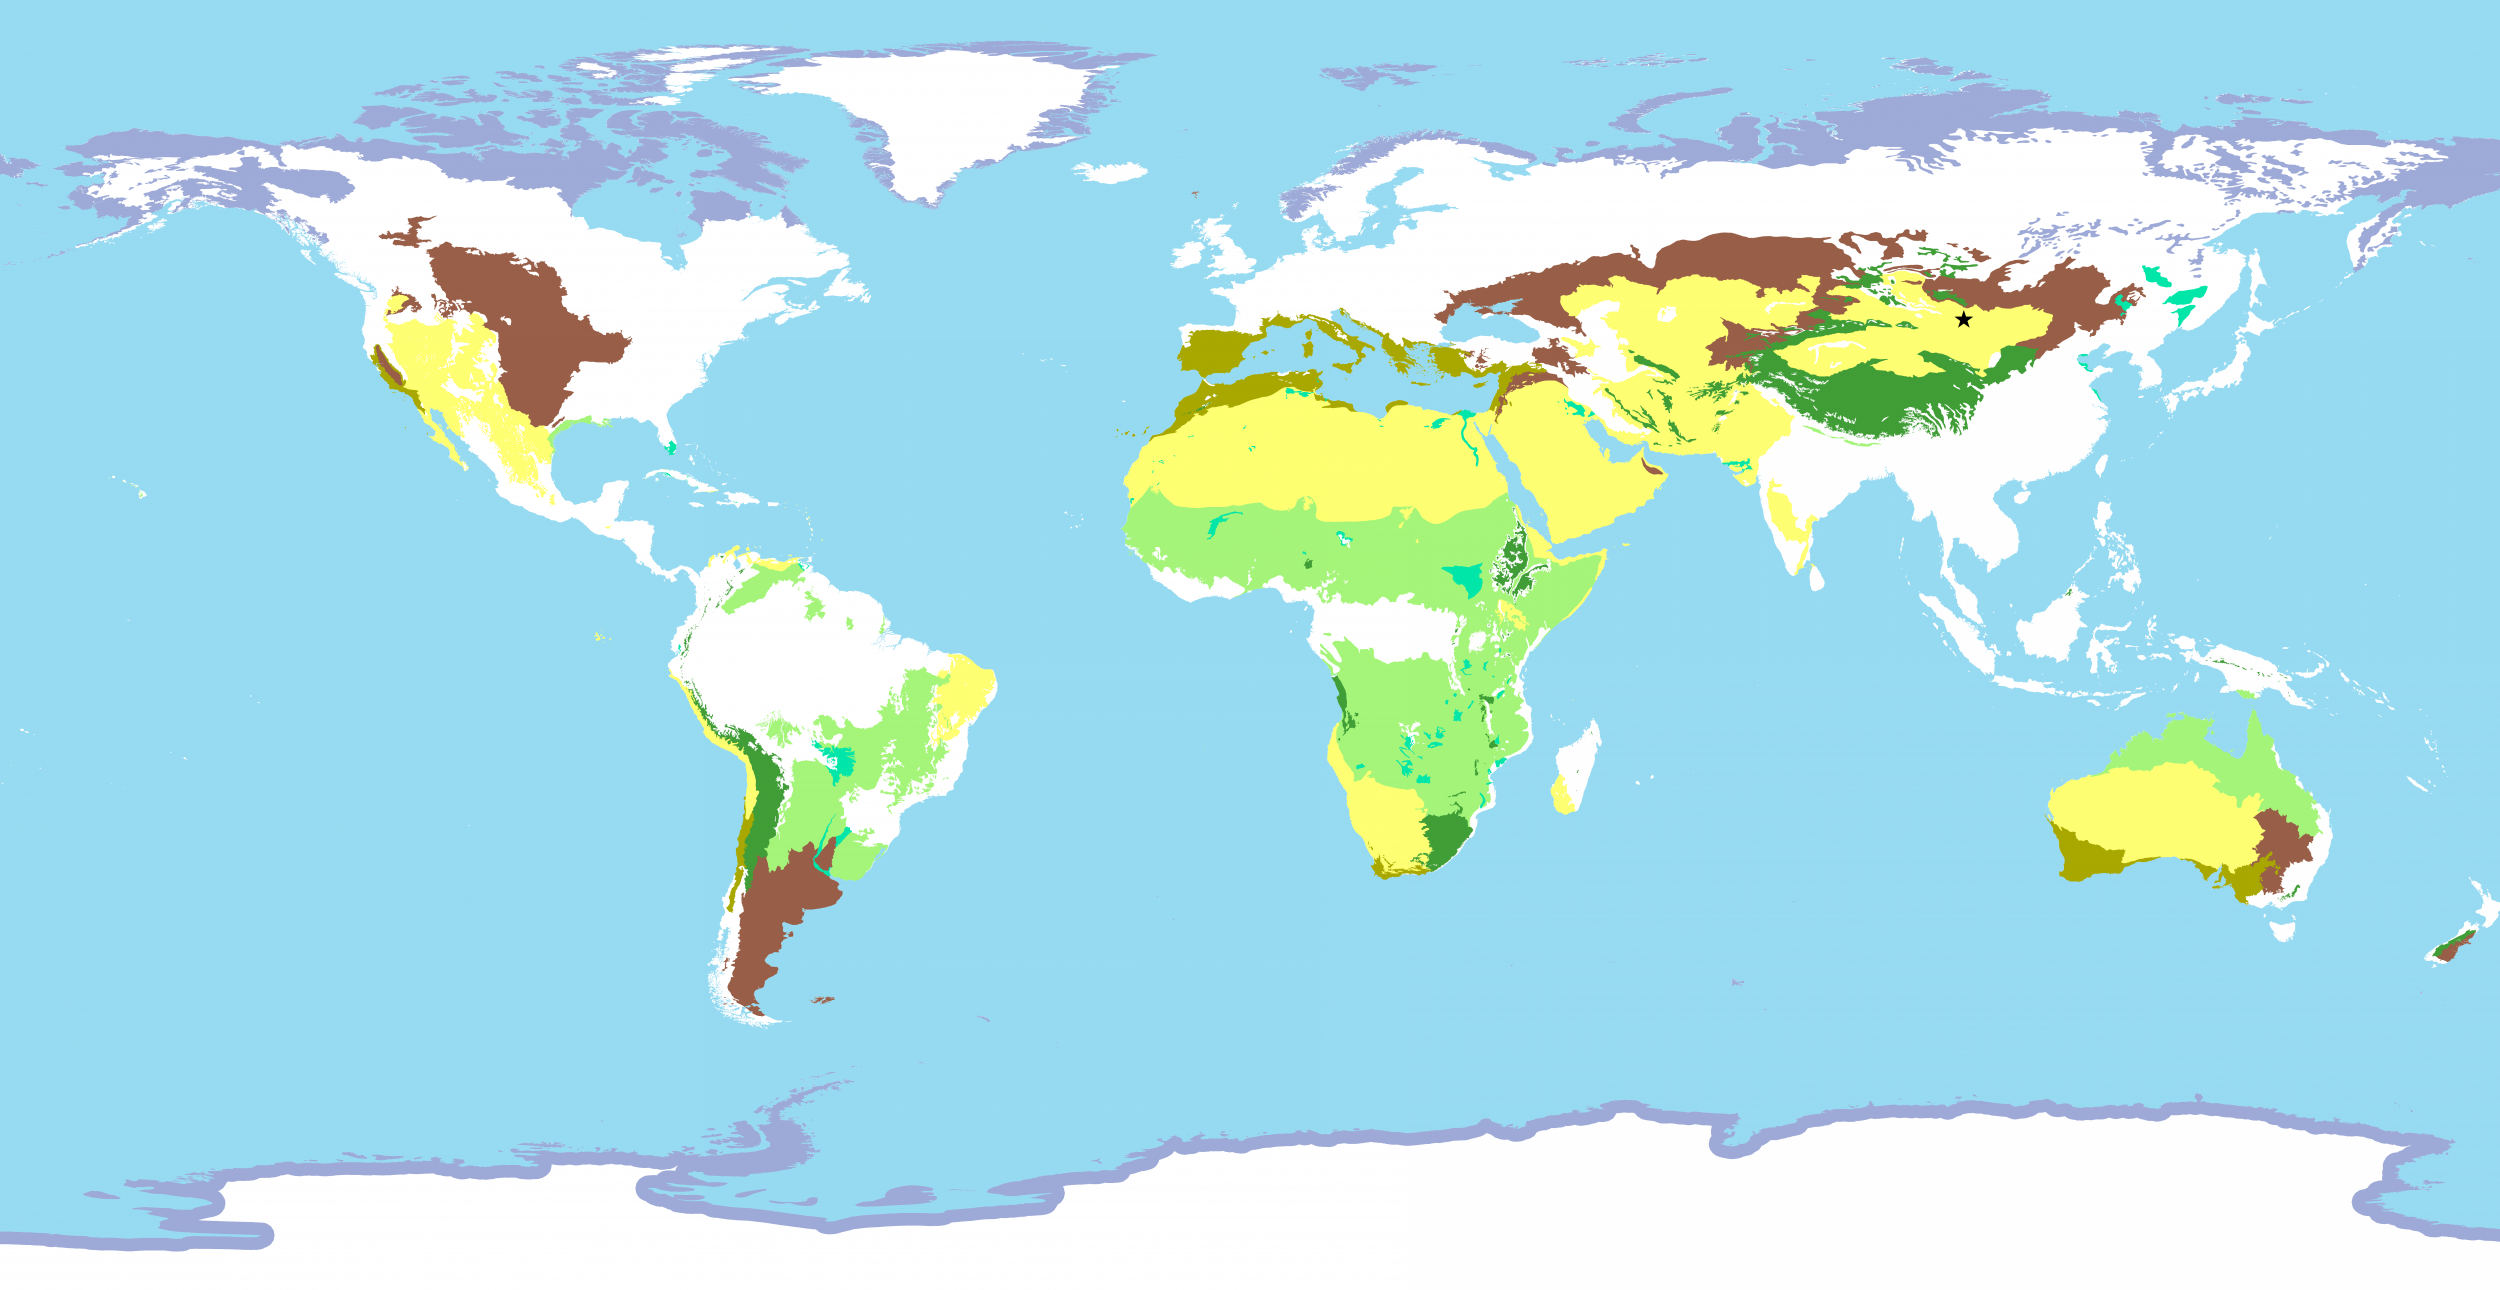 Distribution of rangeland types globally